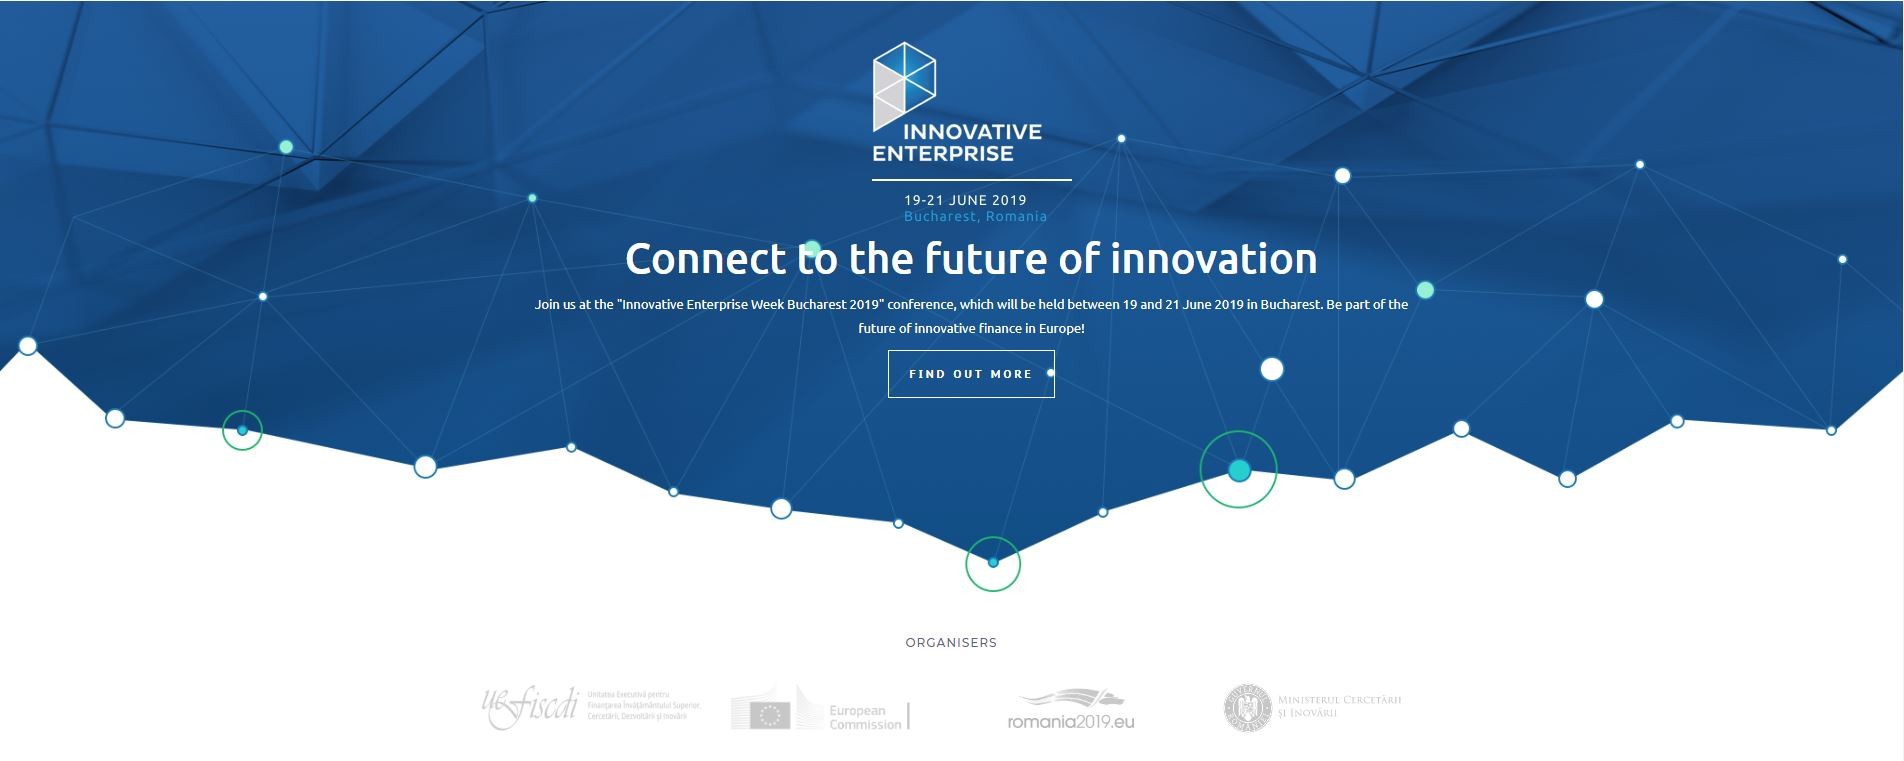 Innovative enterprise- 19-21 iunie 2019, Bucuresti innovative enterprise.JPG